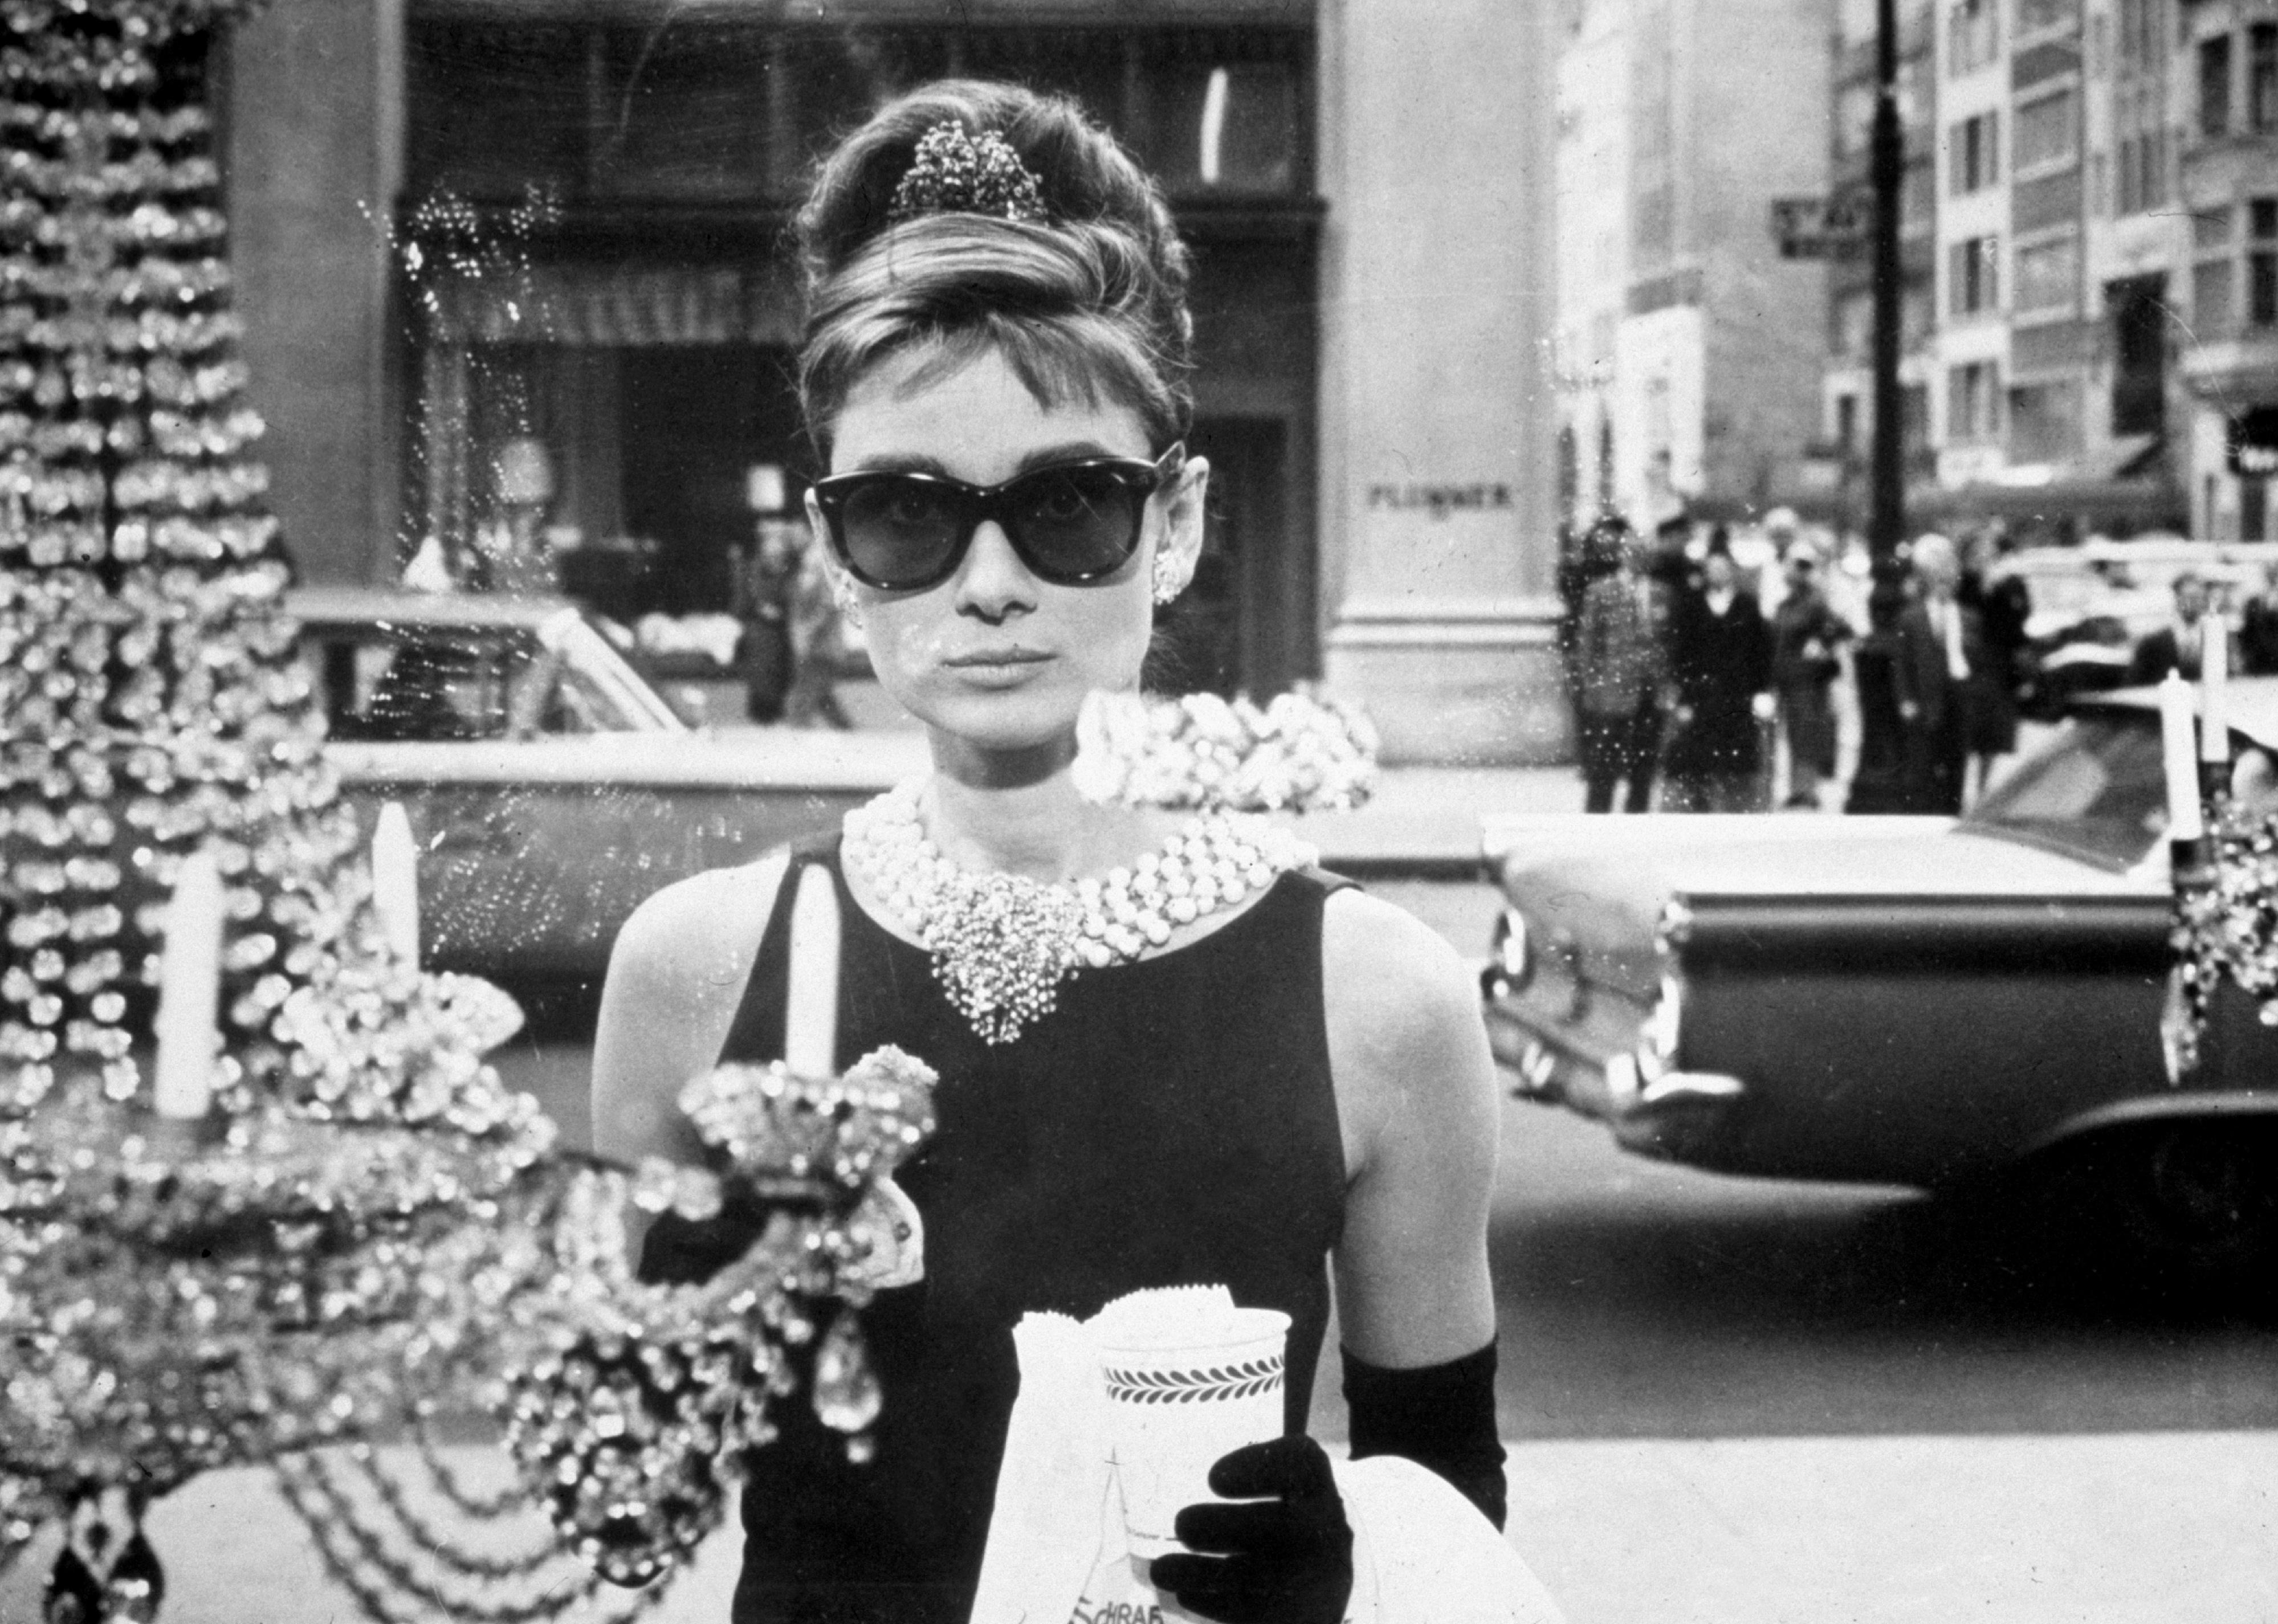 Audrey Hepburn as Holly Golightly in a still from the film, Breakfast at Tiffany